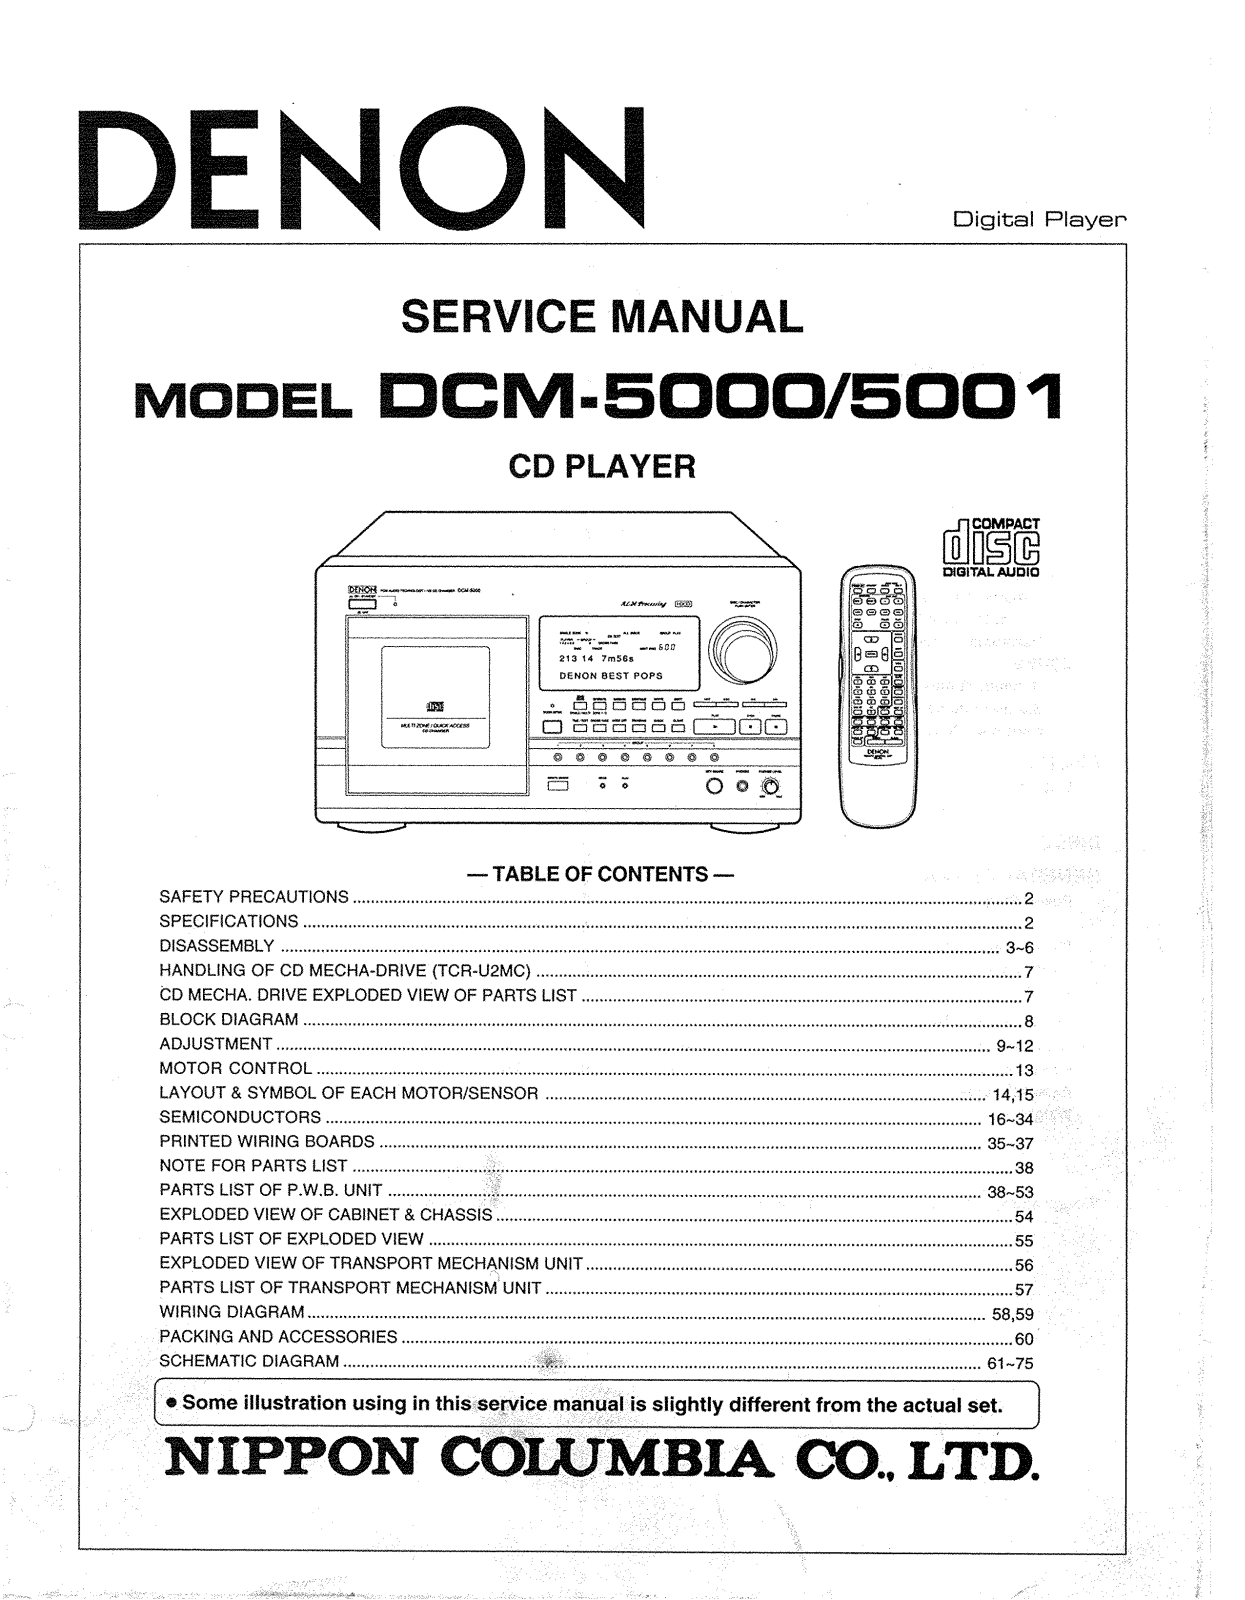 Denon DCM-5000, DCM-5001 Service Manual